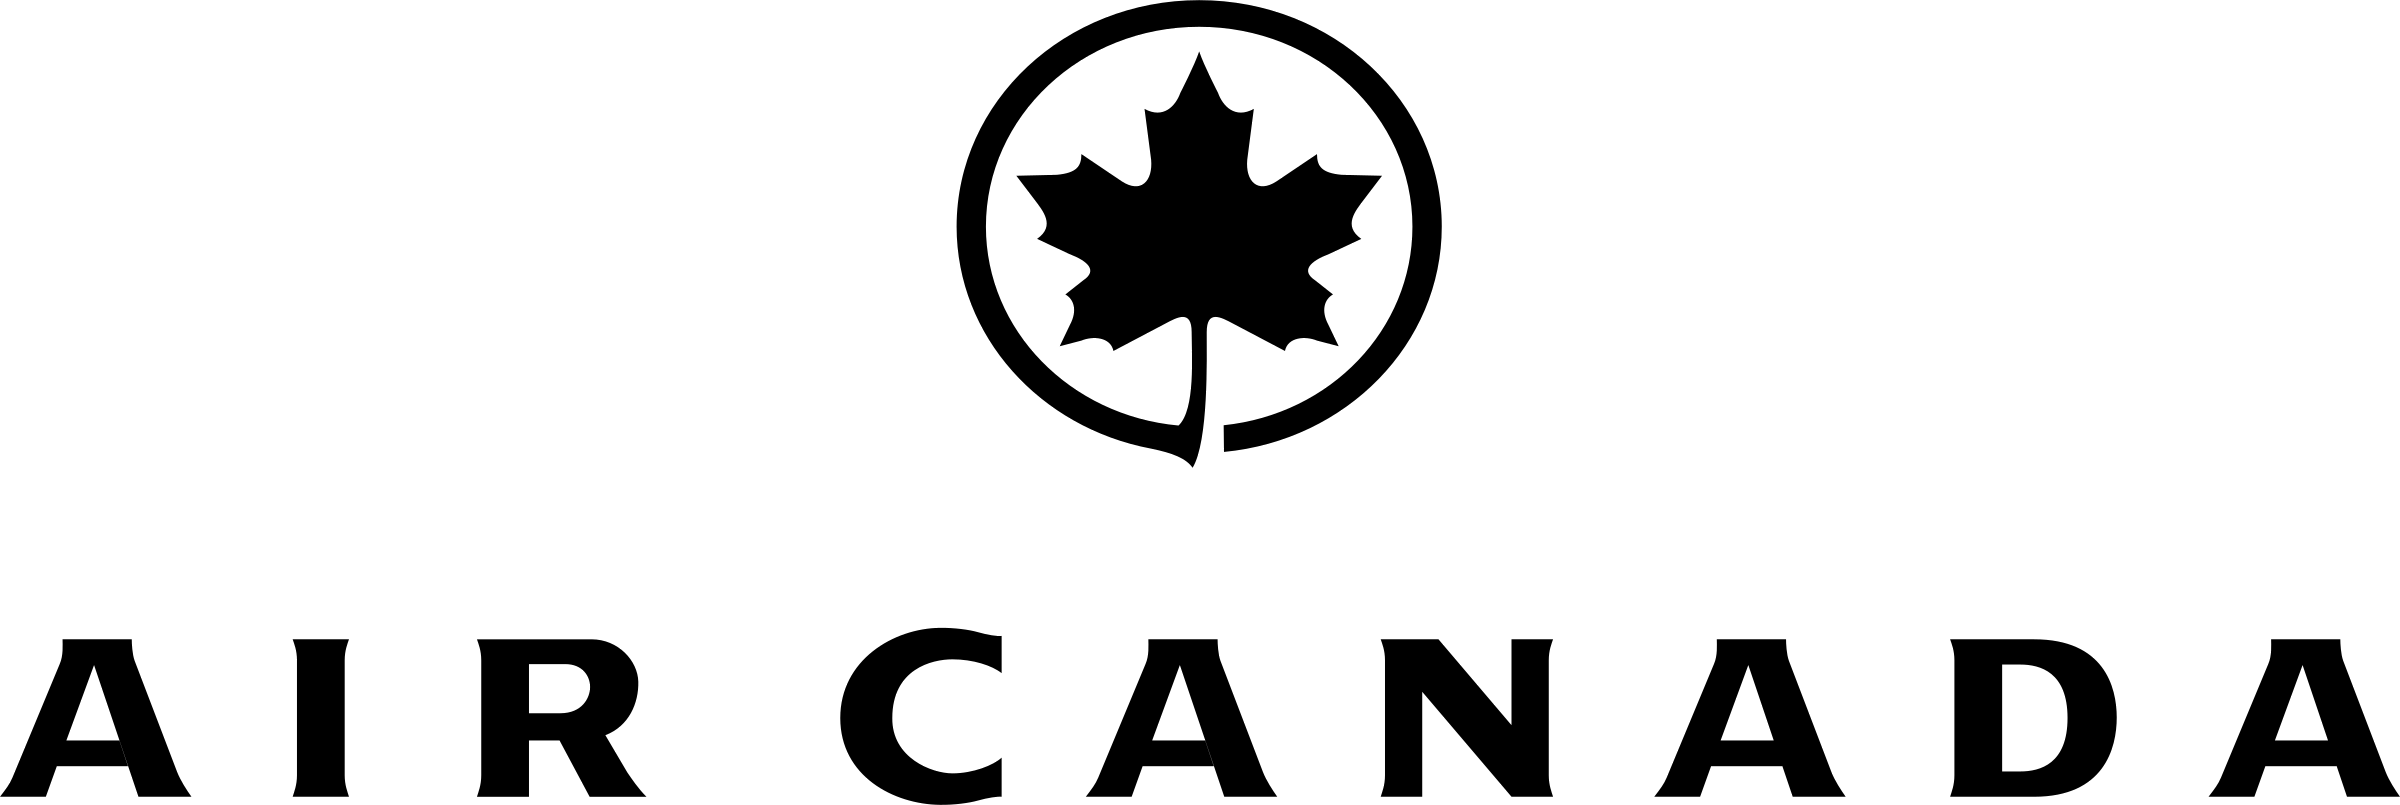 Canada White Logo - Air Canada Logo PNG Transparent & SVG Vector - Freebie Supply